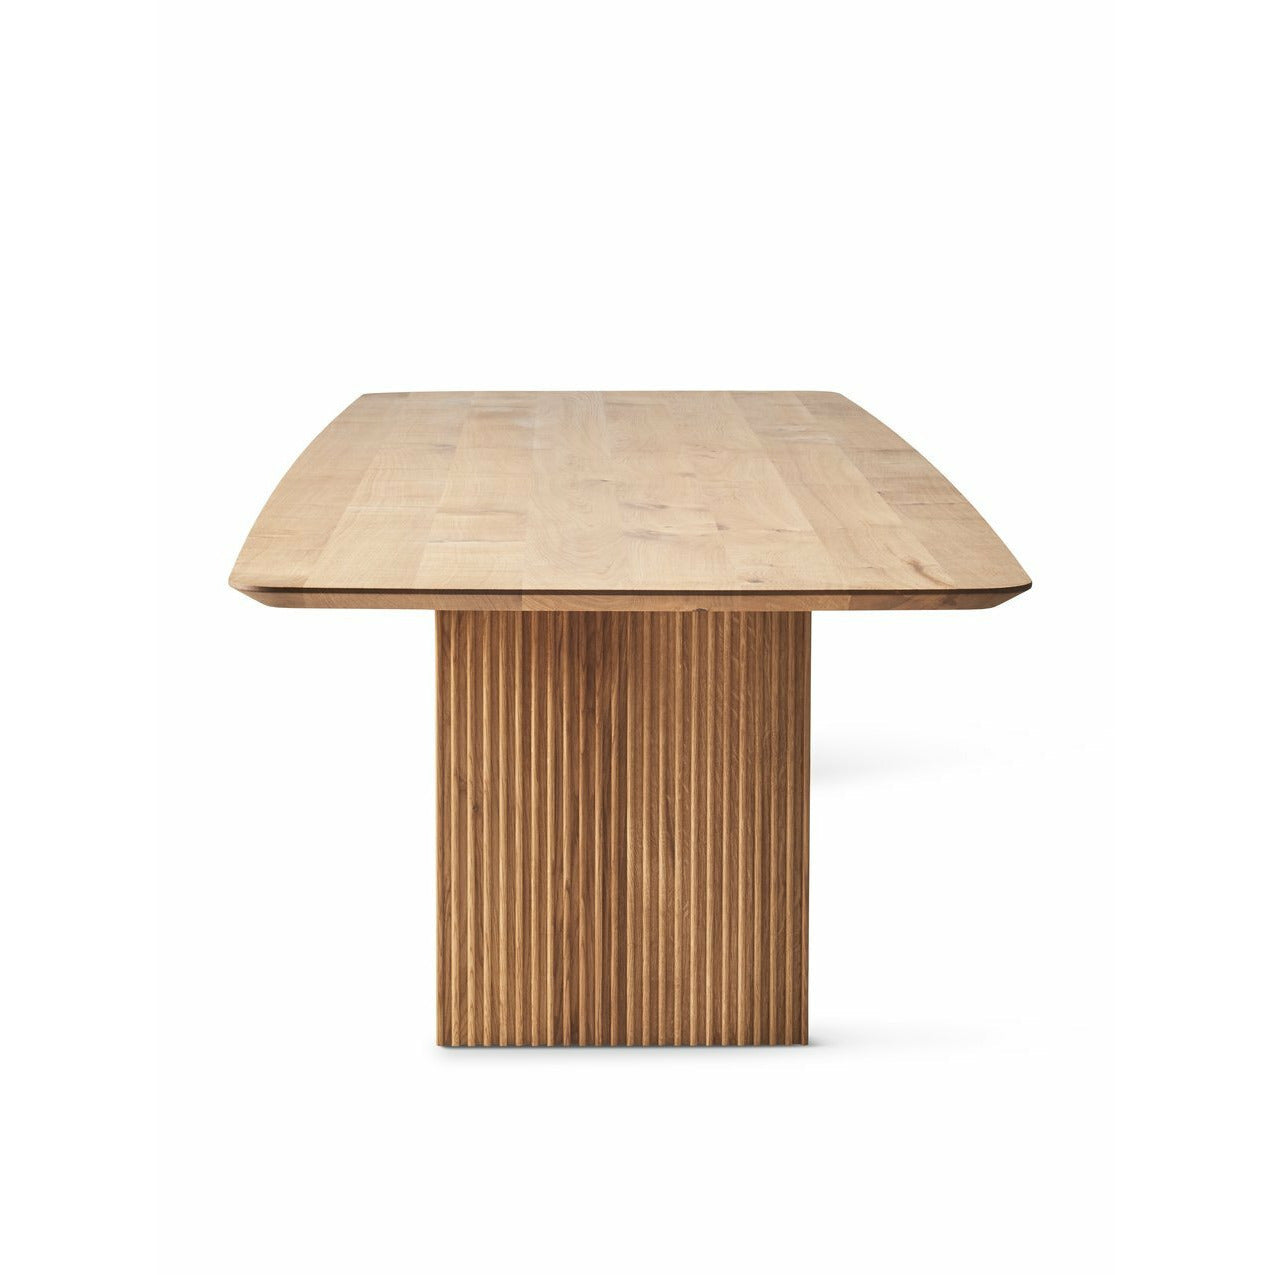 DK3 Tio bord matbord vild oljed ek, 300x105 cm